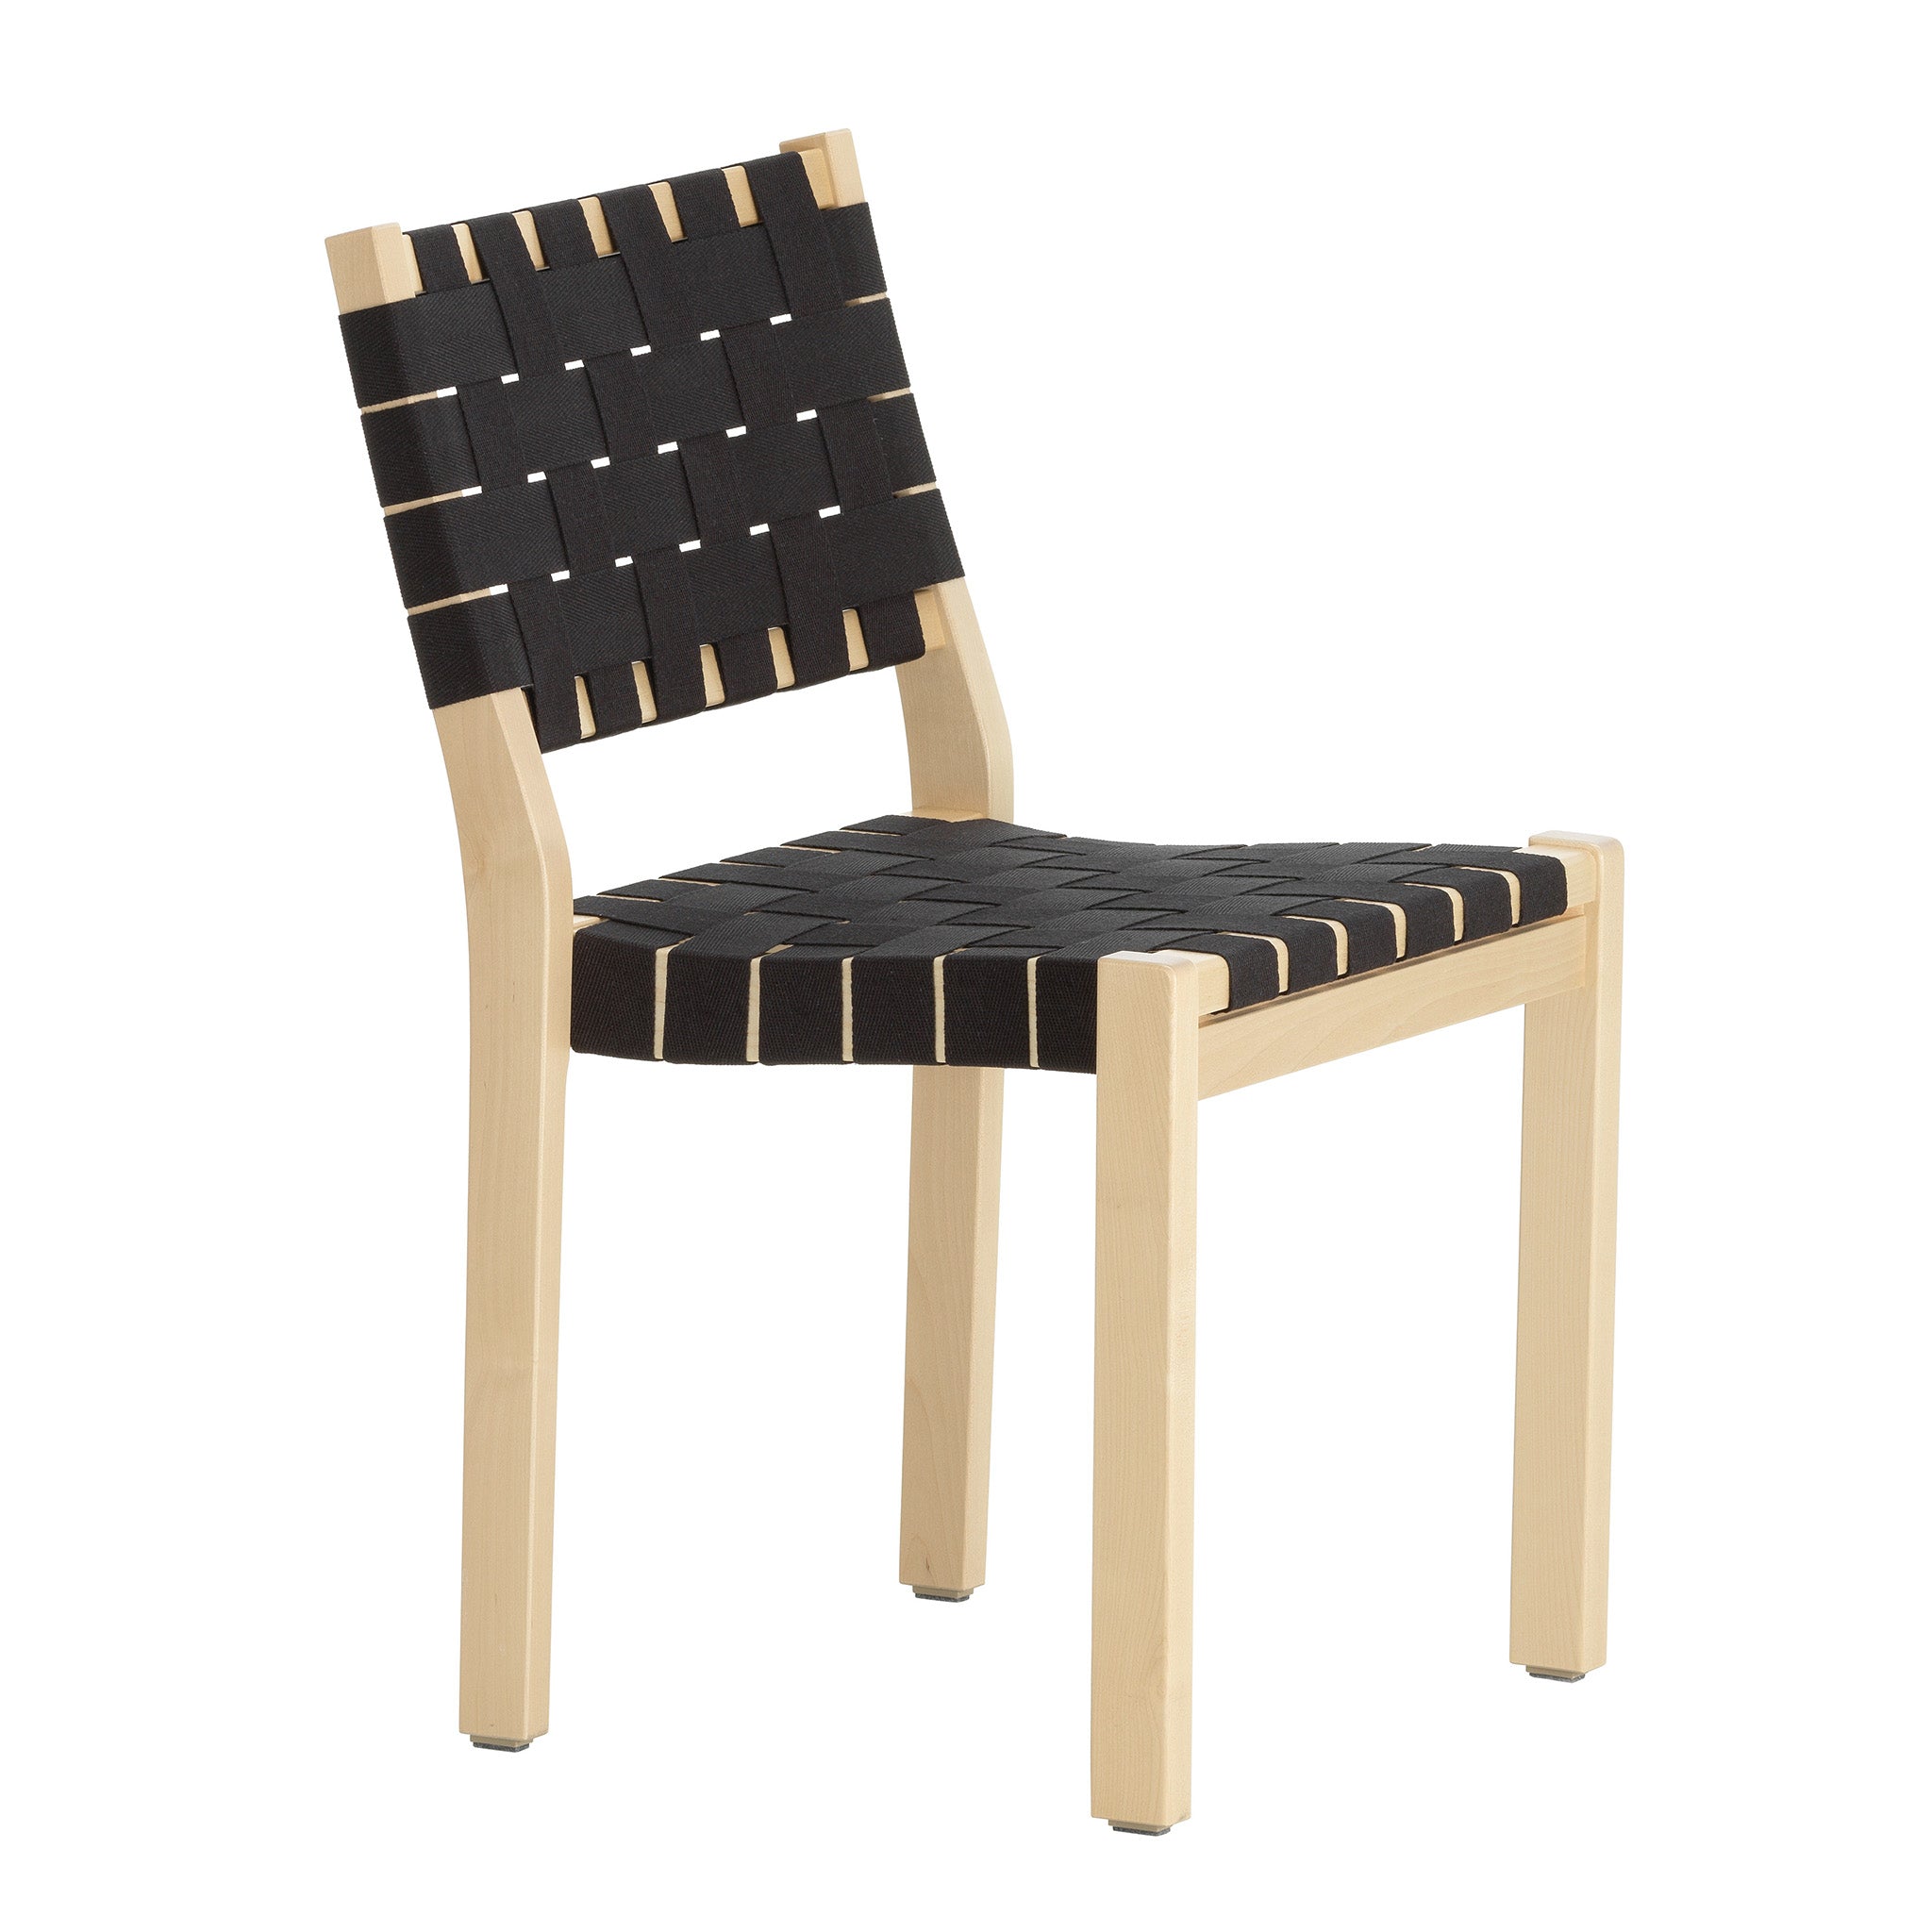 Chair 611 by Artek